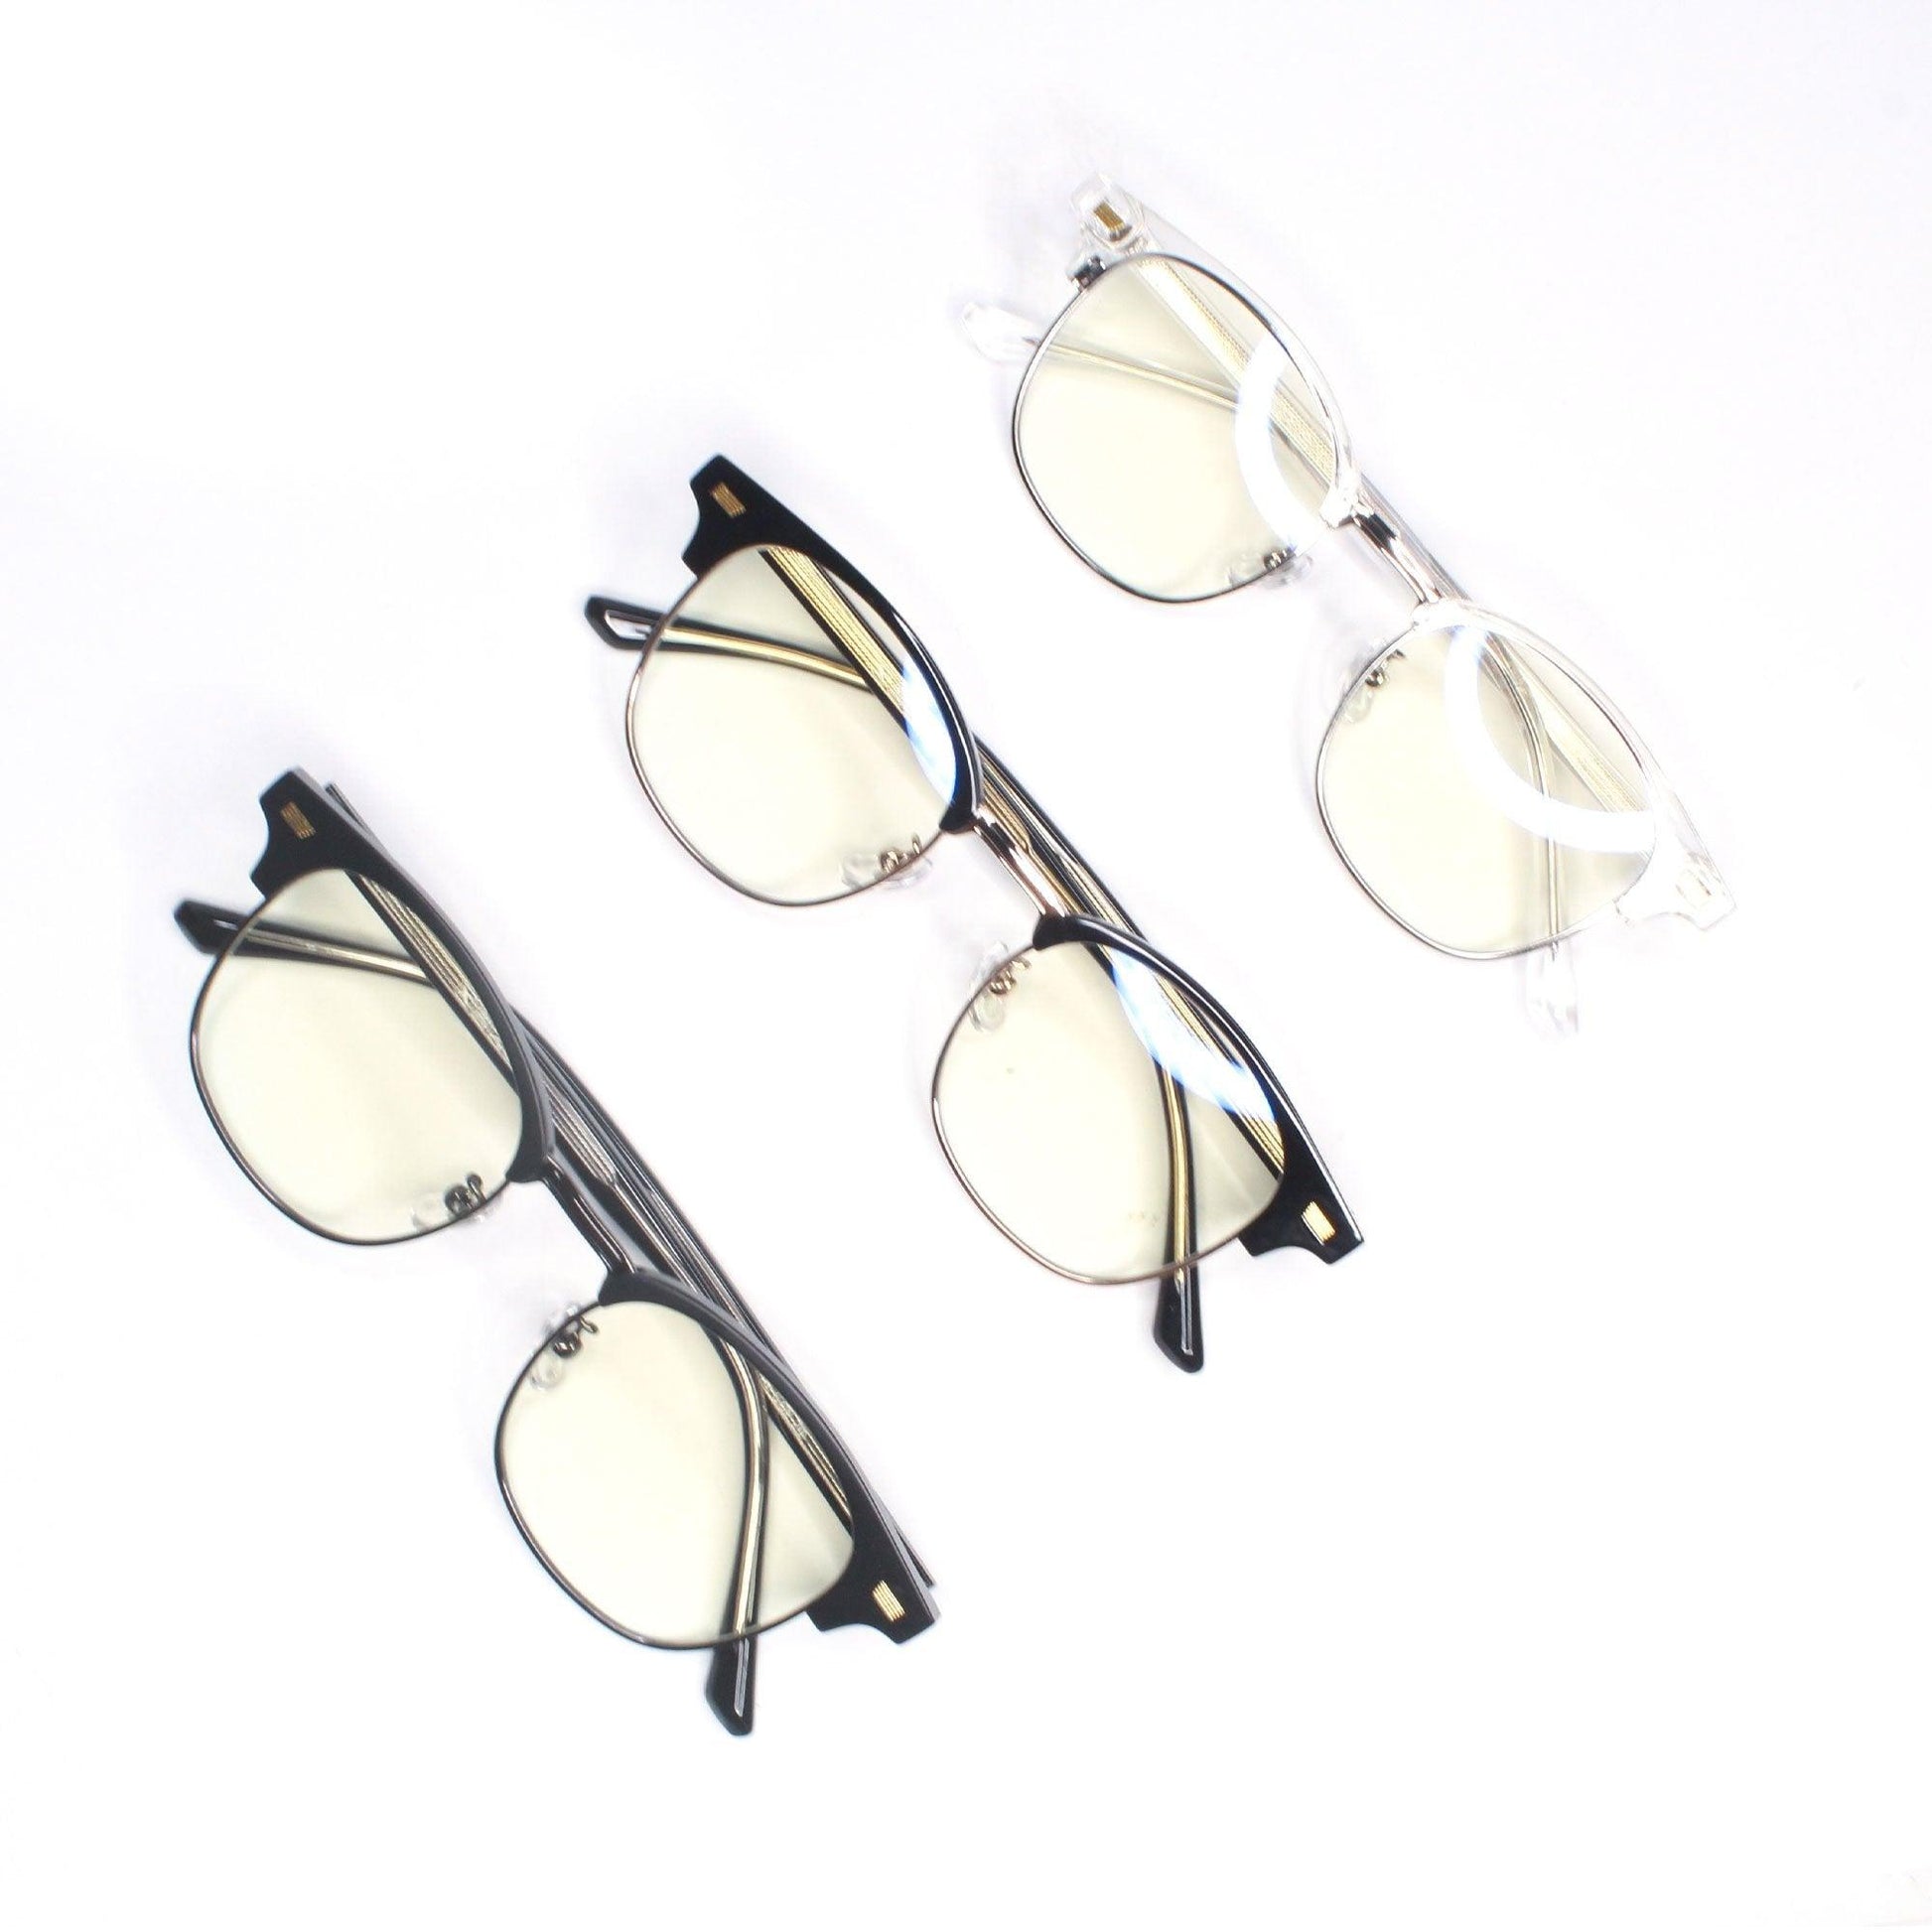 Peculiar SETH Square Premium Frame Anti Radiation Glasses UV400 - peculiareyewear